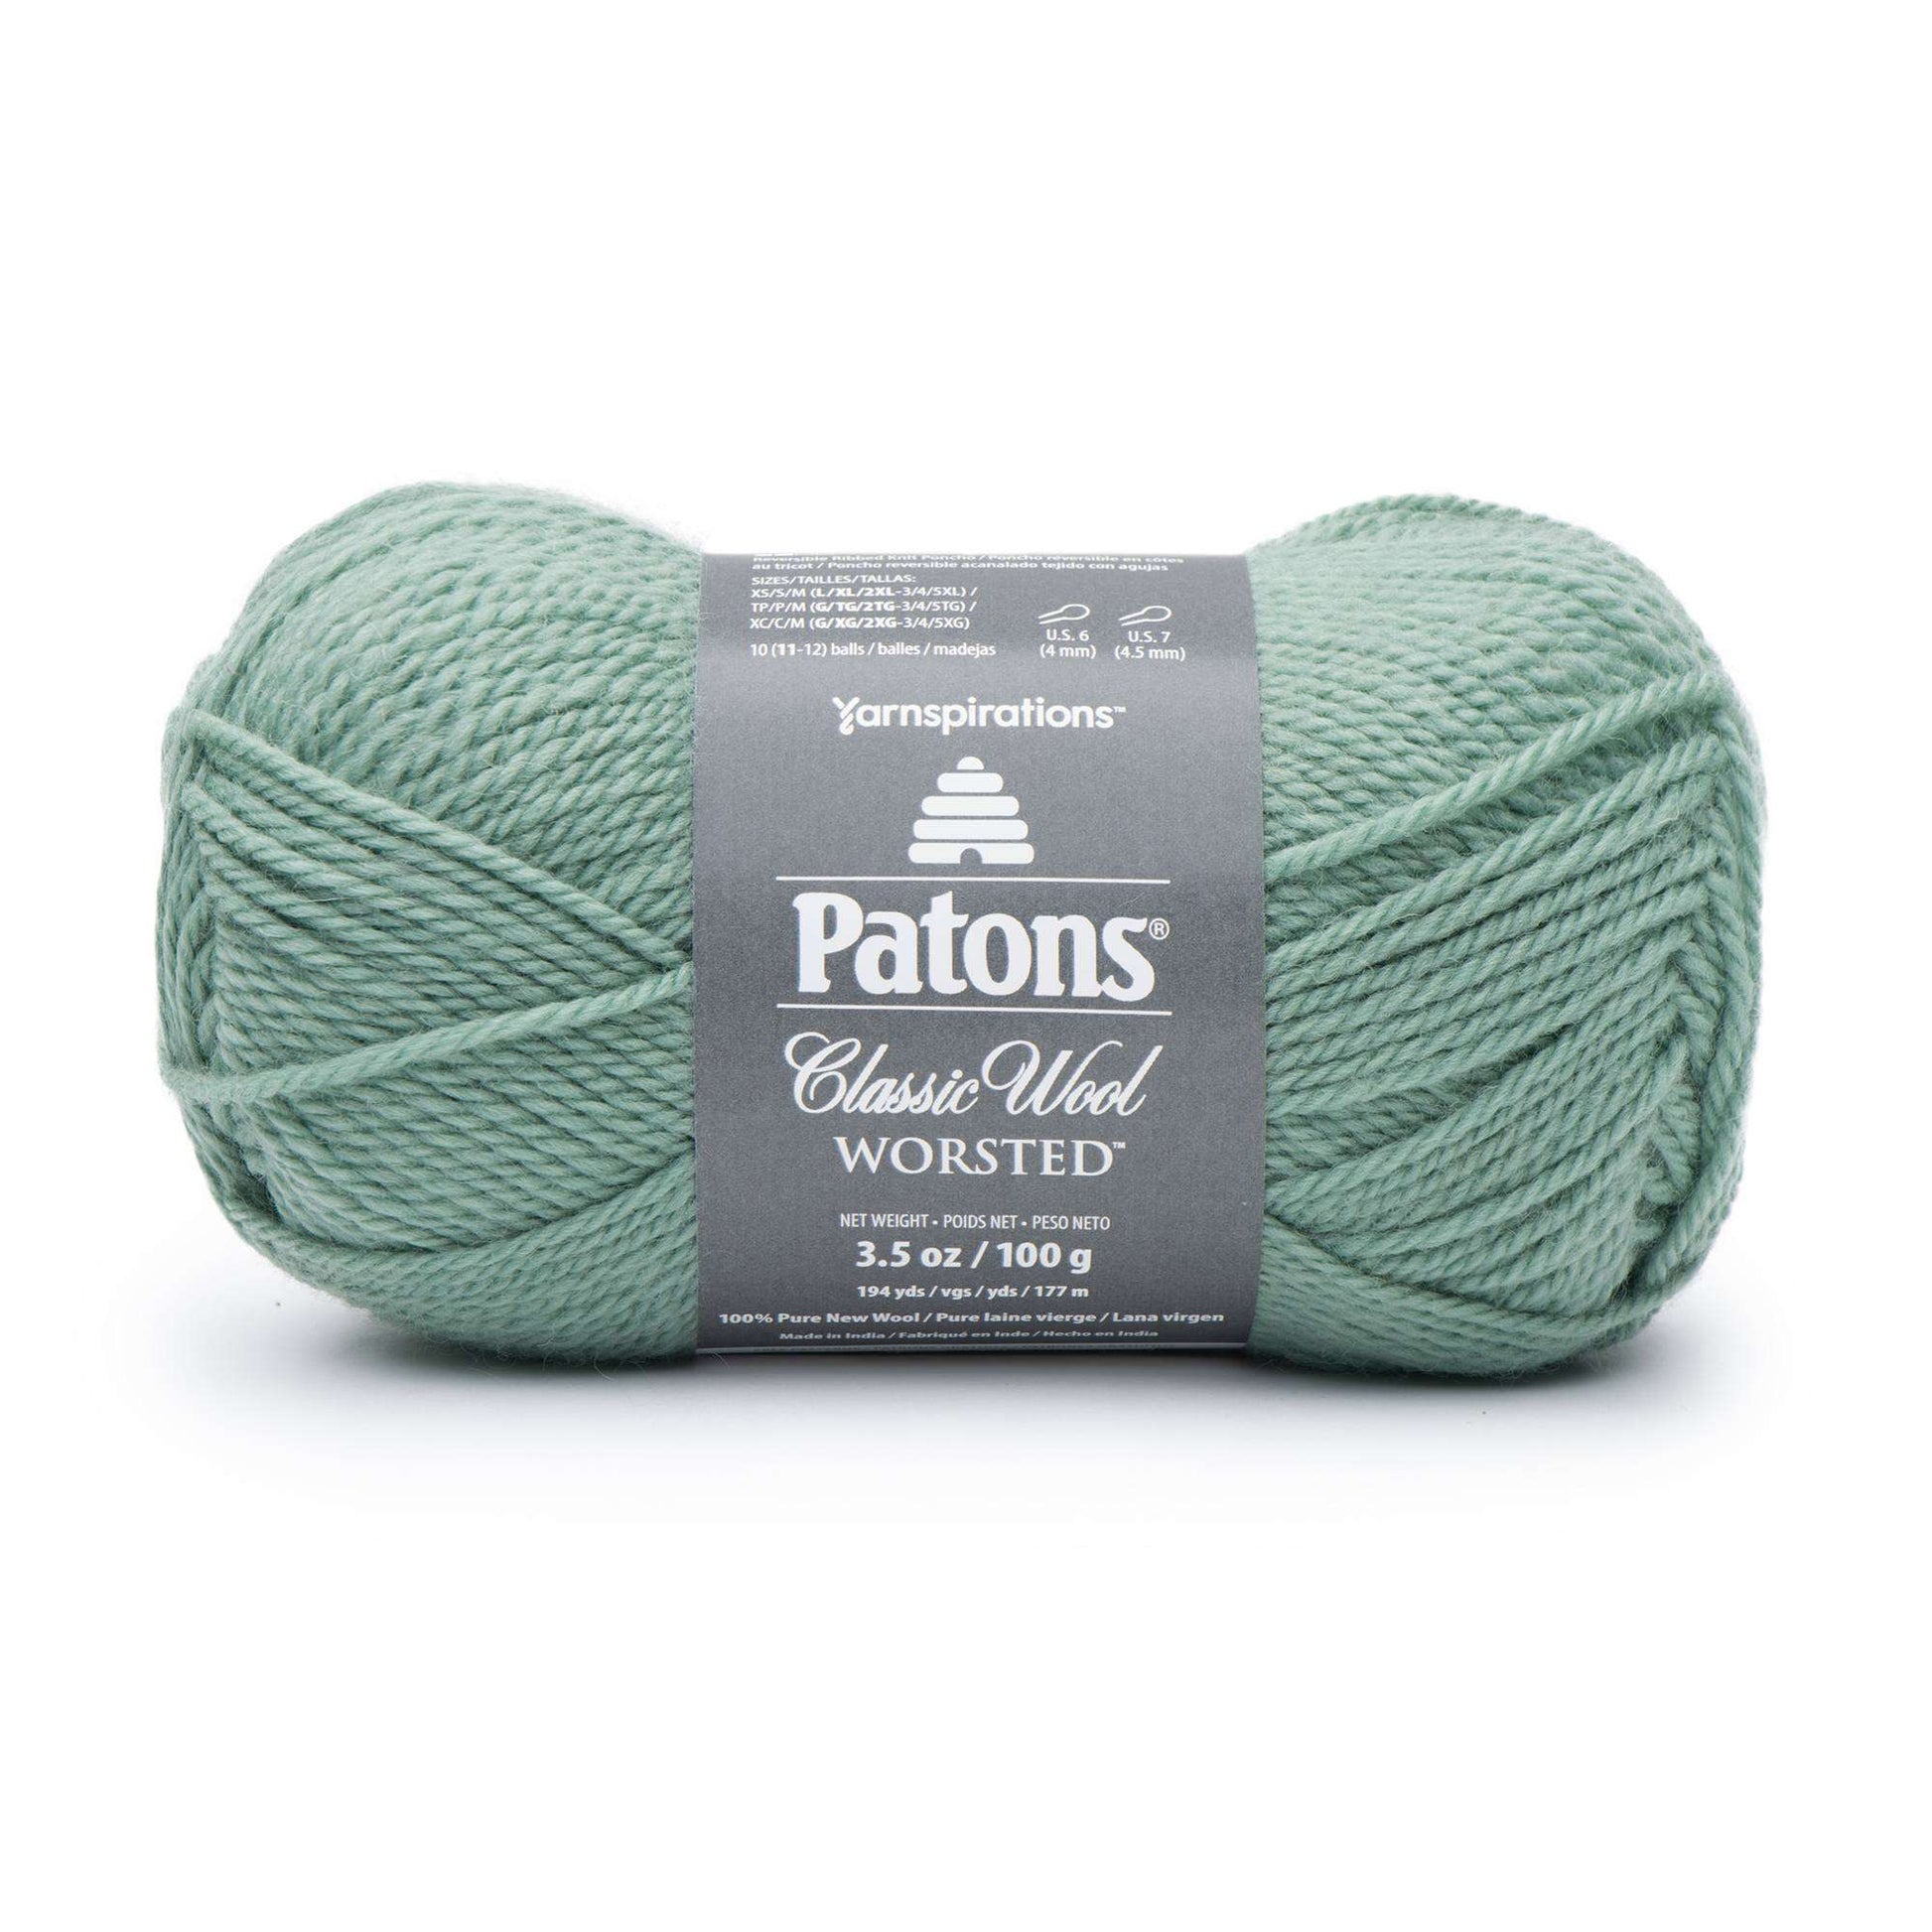 Mixed lot of knitting / crochet wool 100 balls yarn 100g clearance